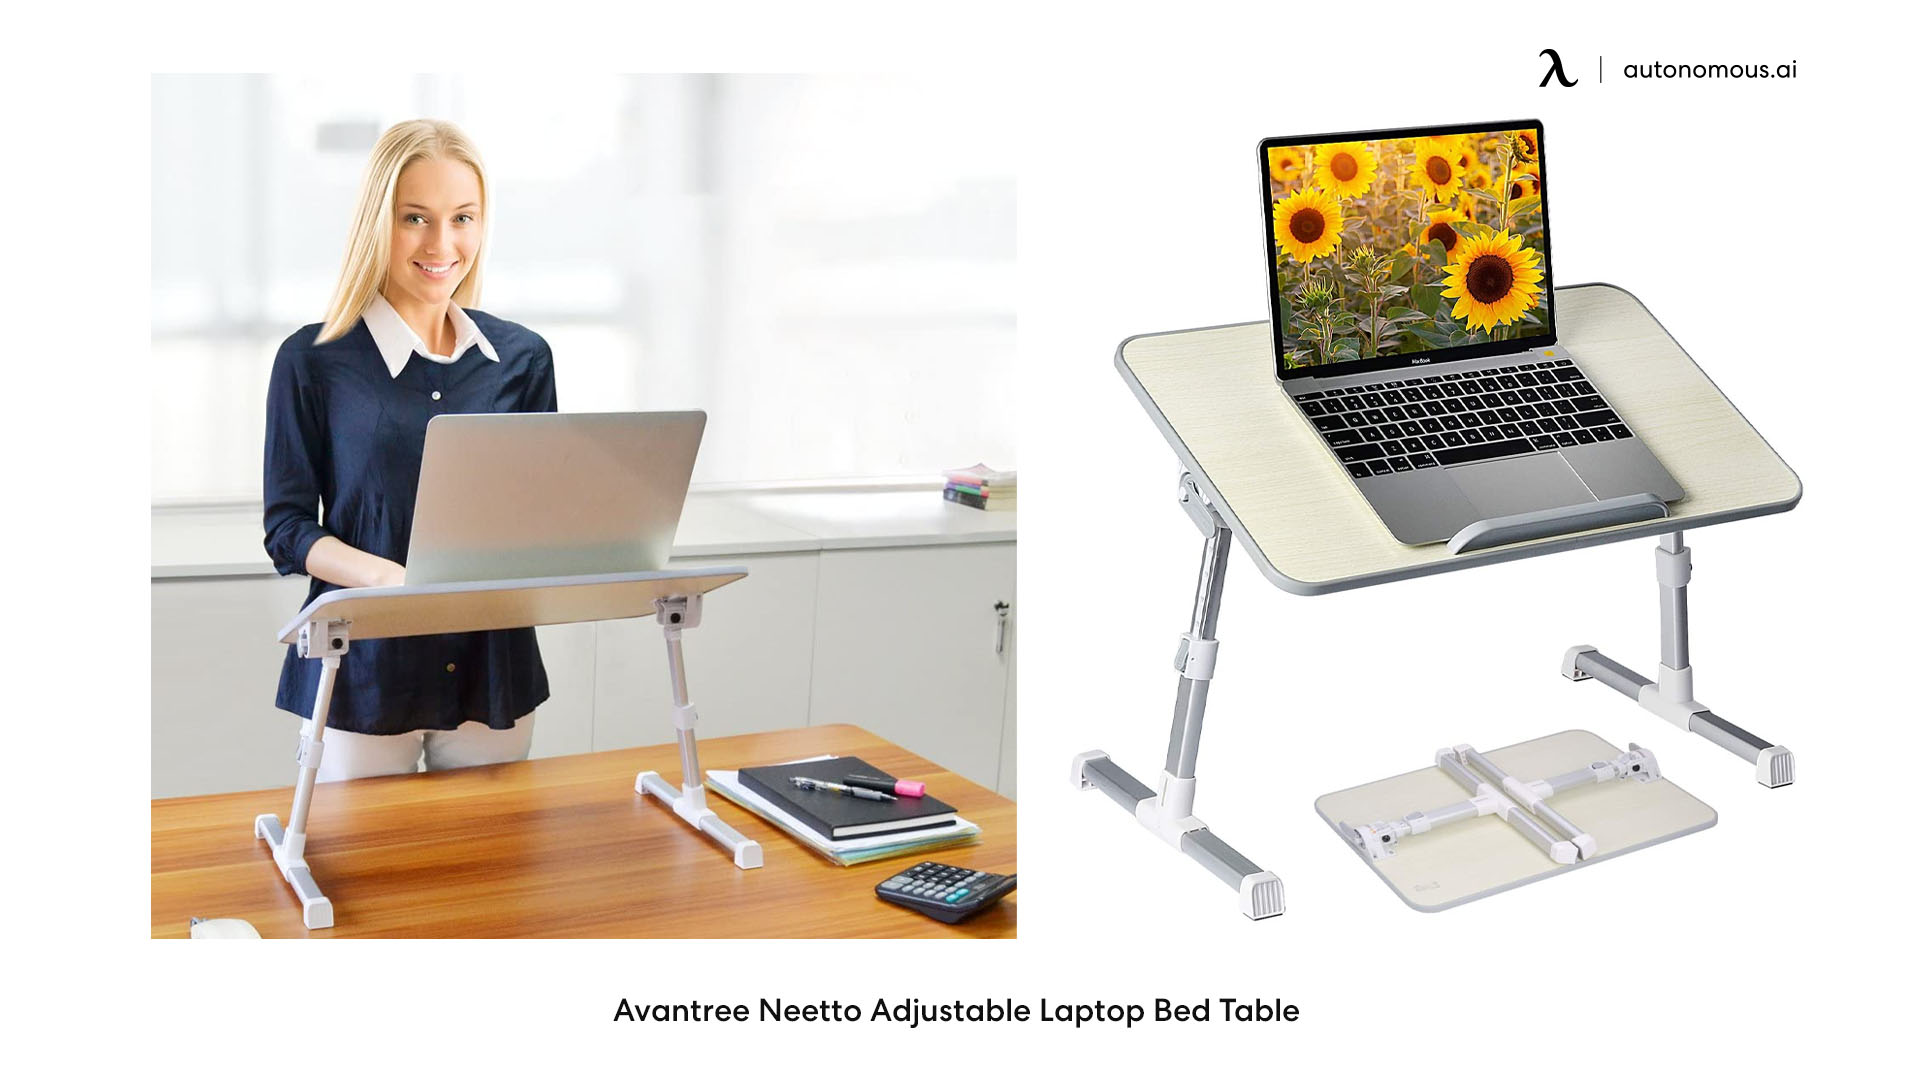 Avantree Neetto Adjustable Laptop Bed Table